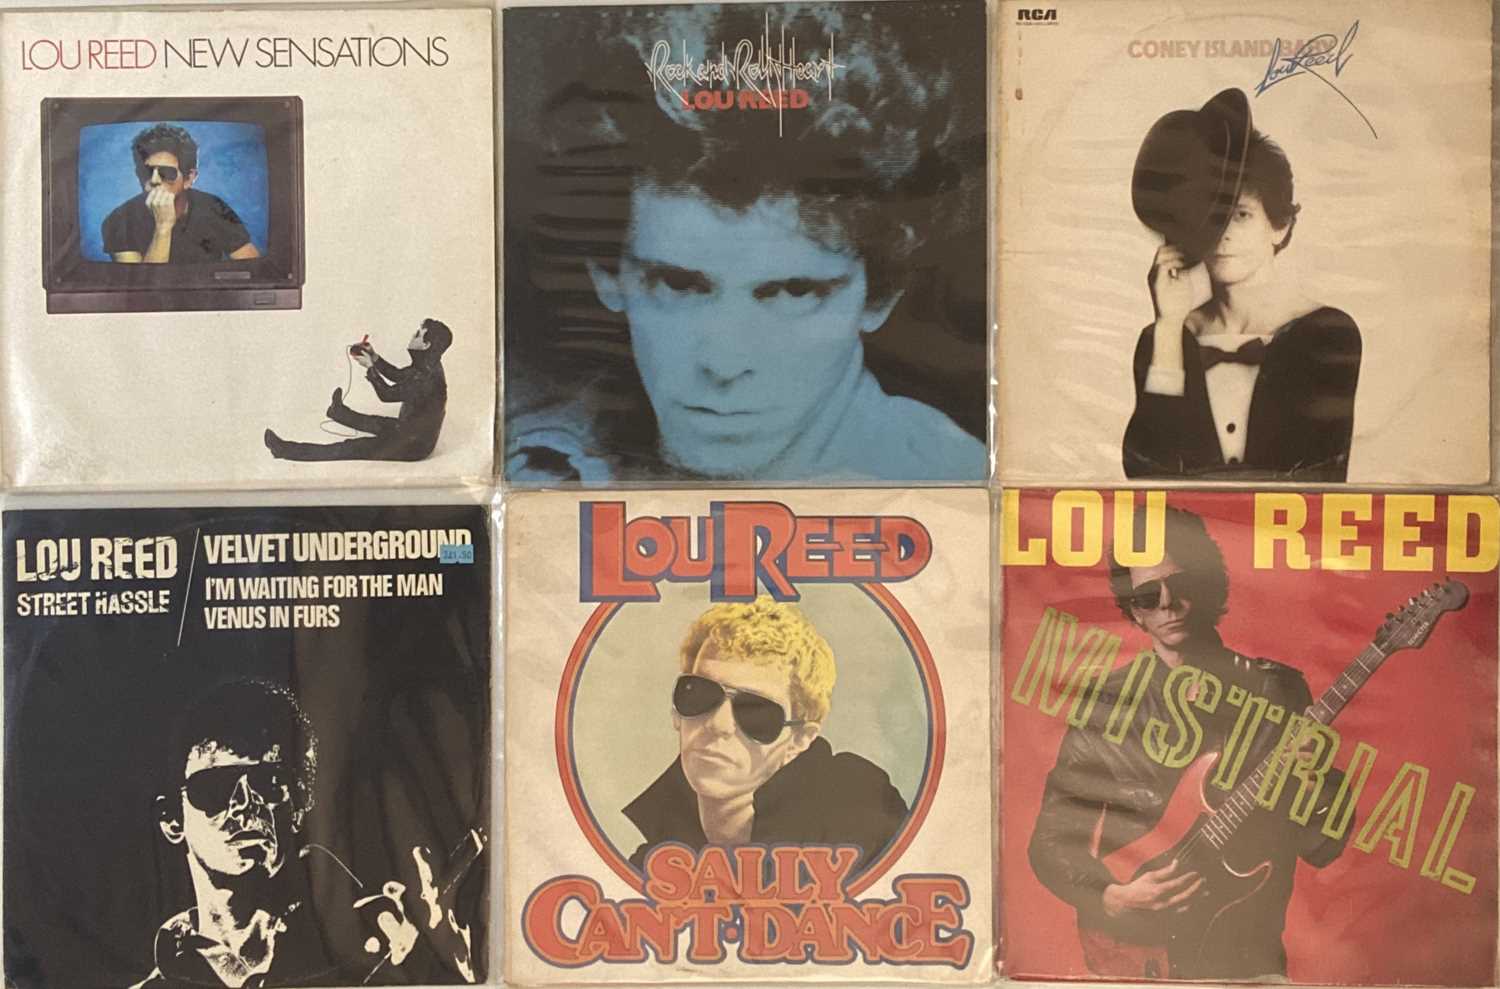 Velvet Underground/ Lou Reed - LPs - Image 2 of 2